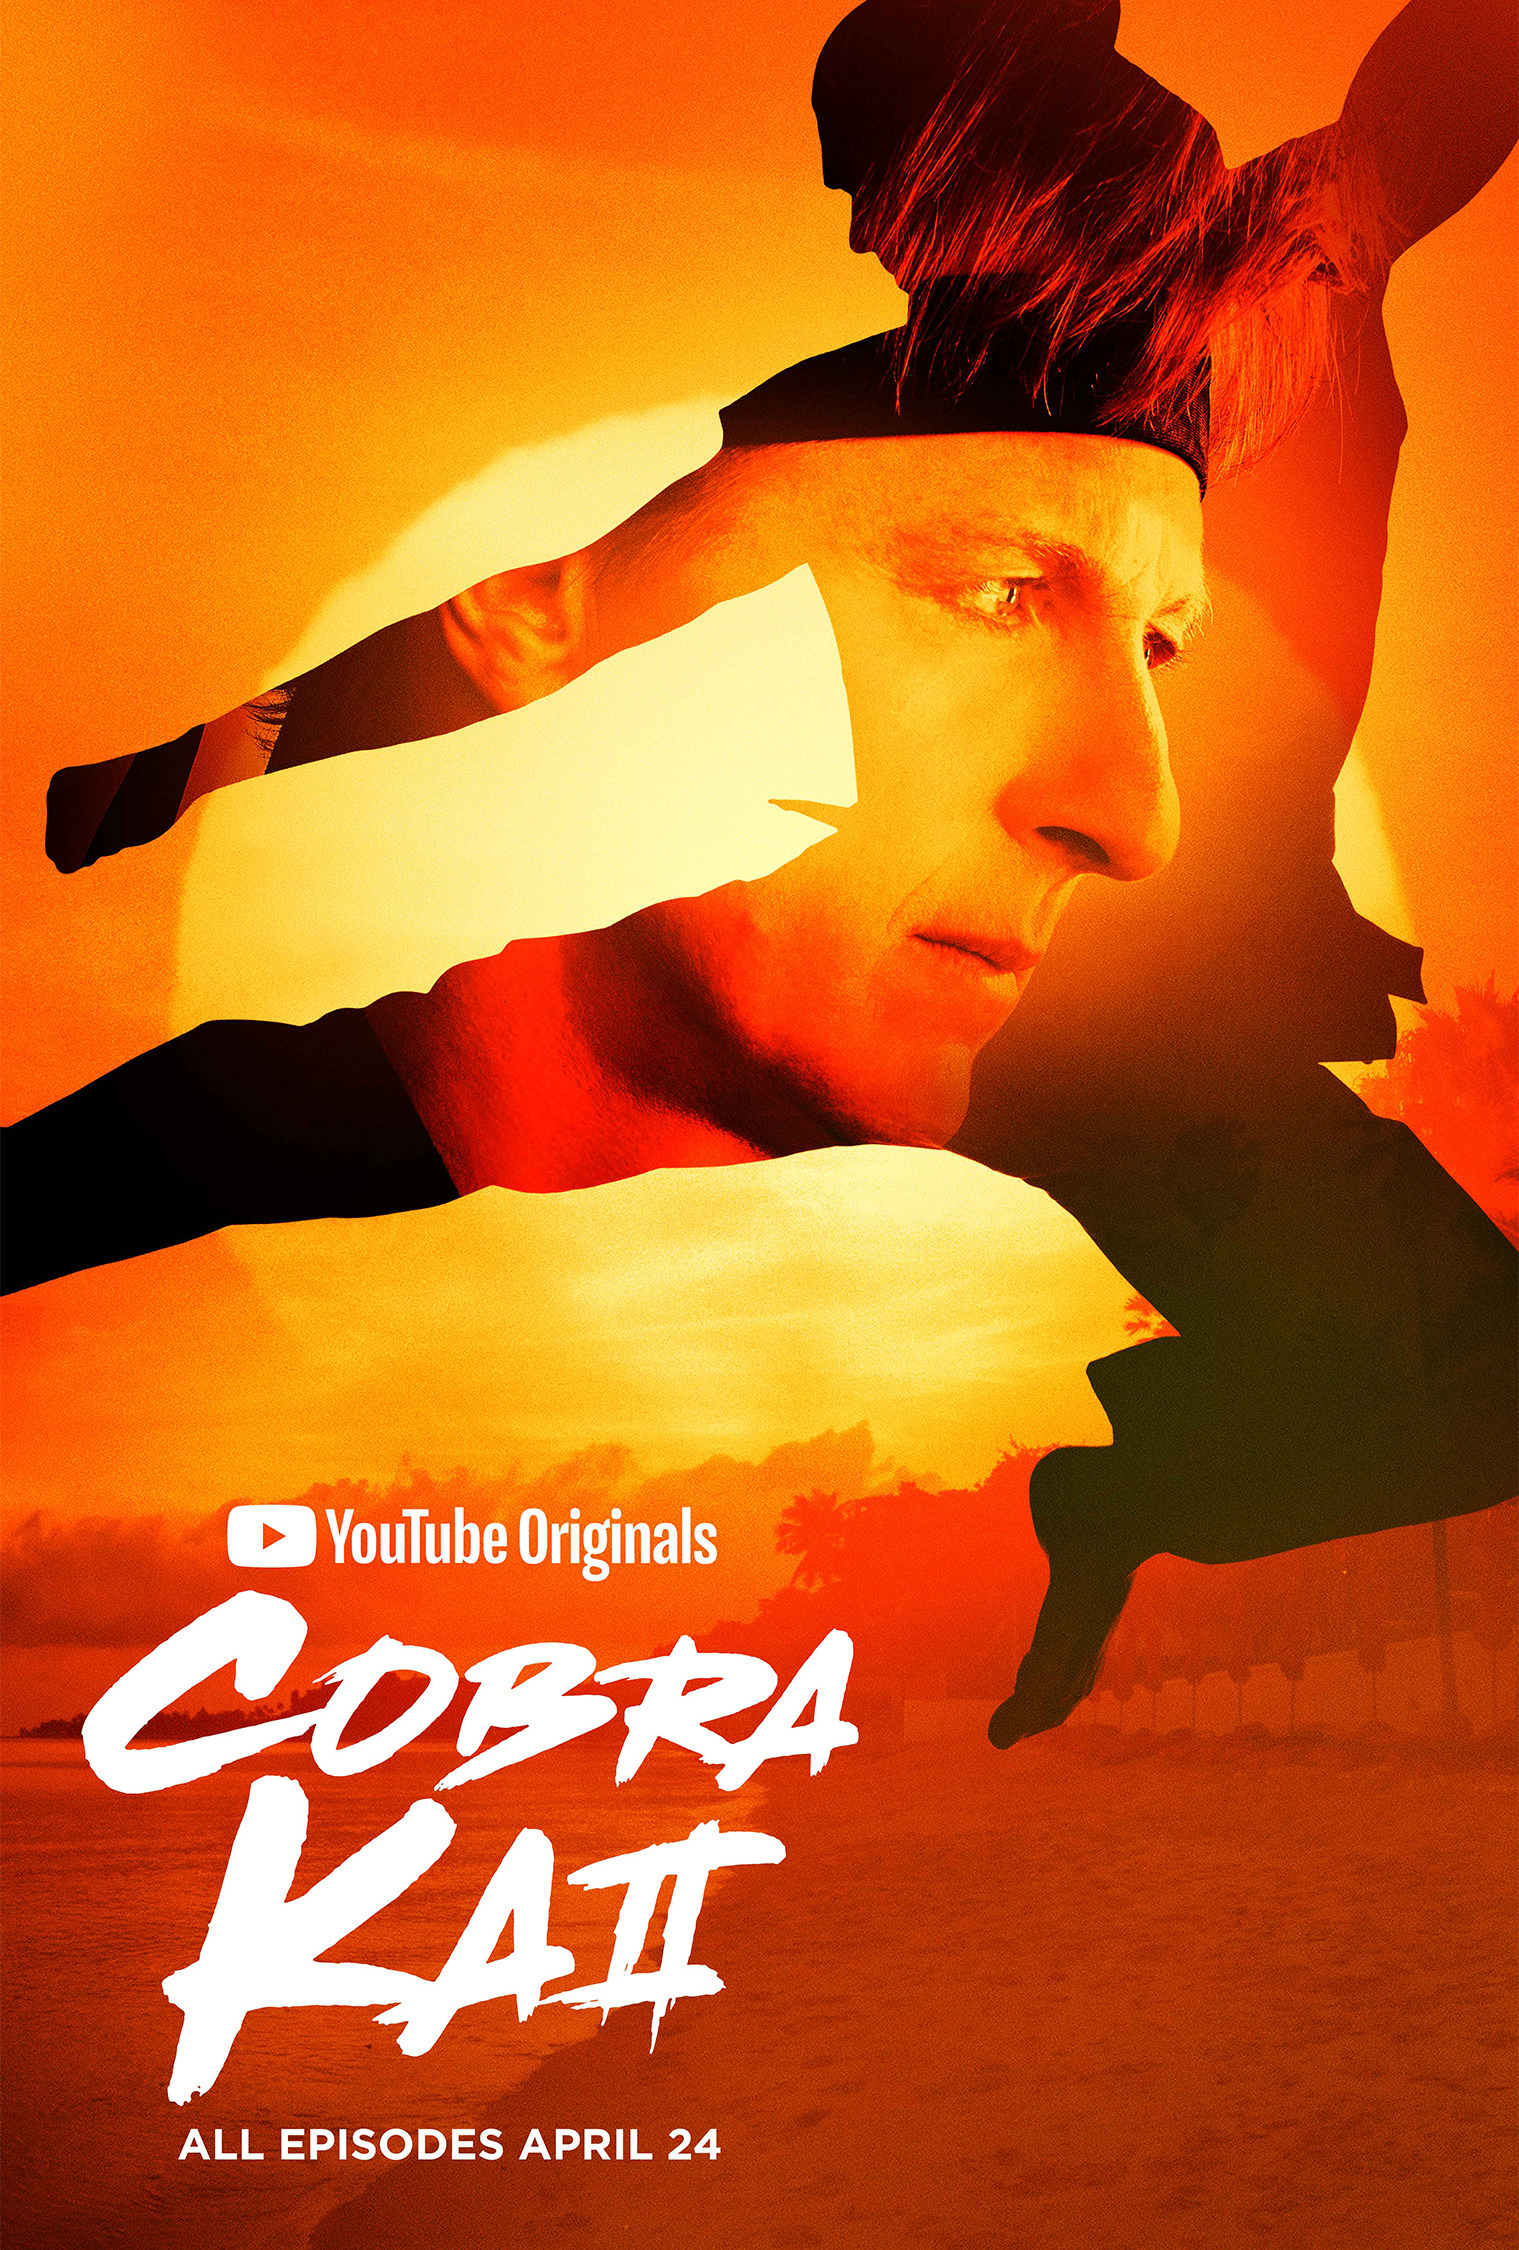 Mega Sized TV Poster Image for Cobra Kai (#6 of 20)